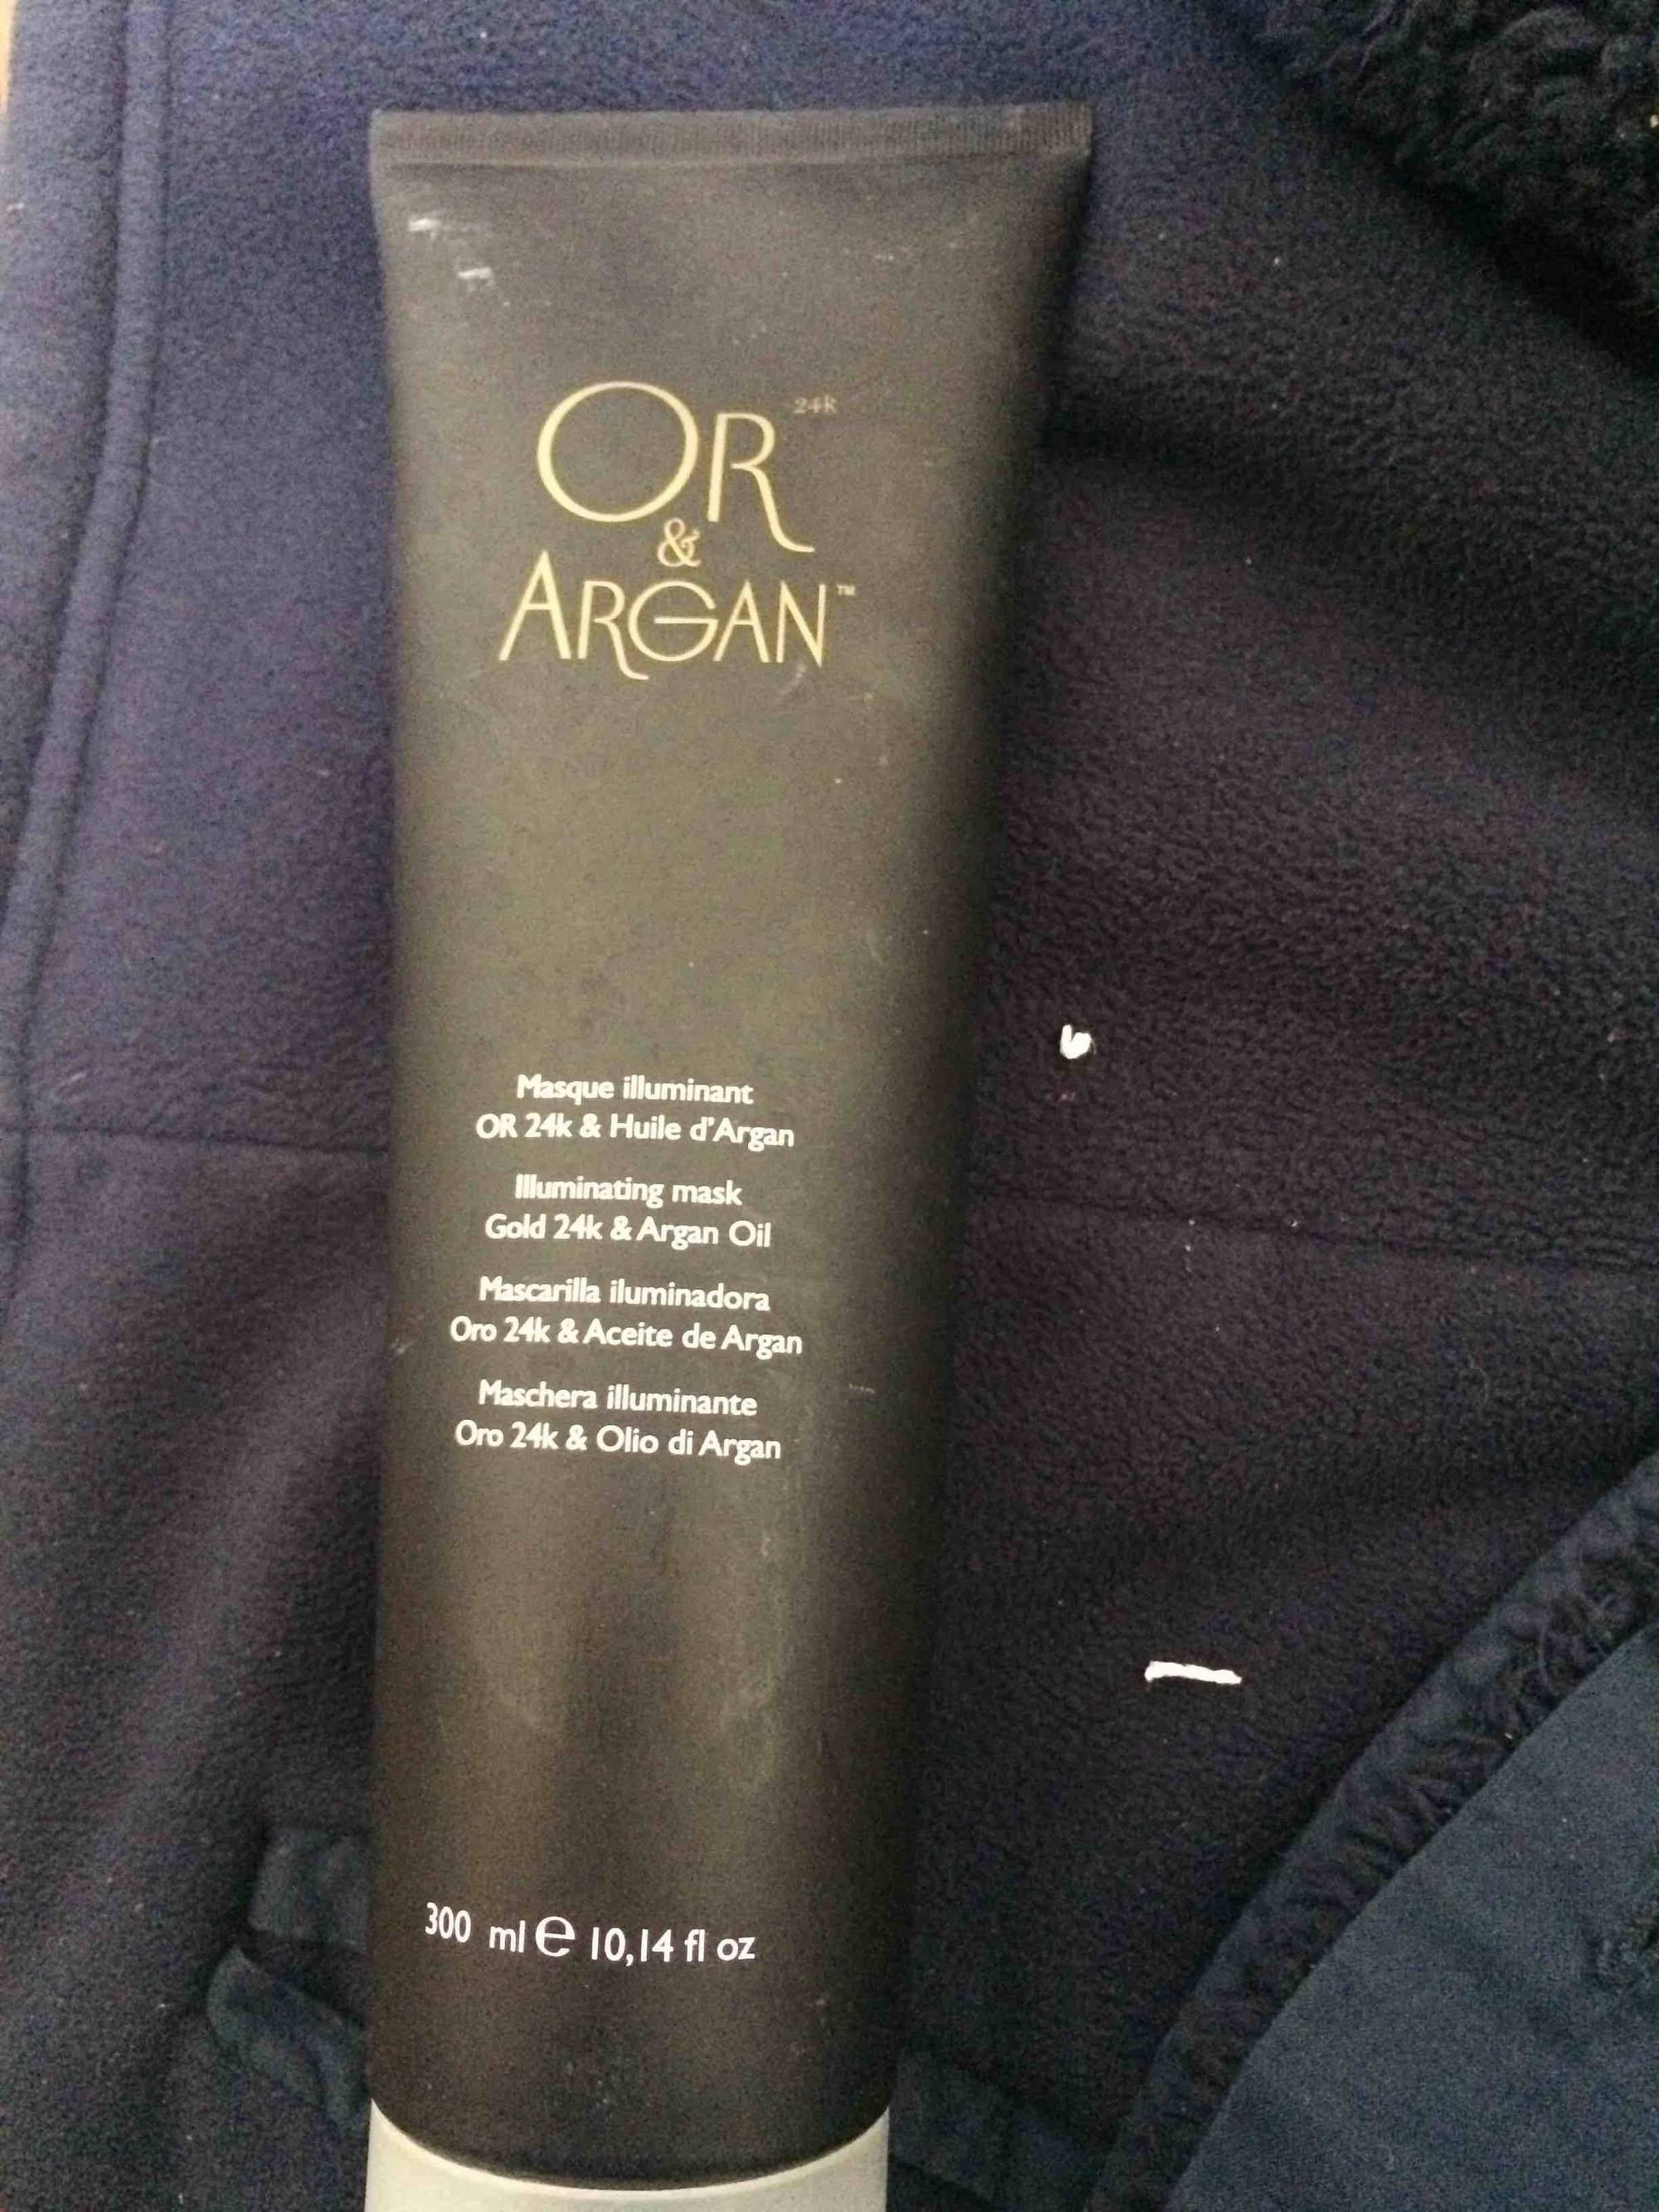 OR & ARGAN - Masque illuminant or 24k & huile d'Argan